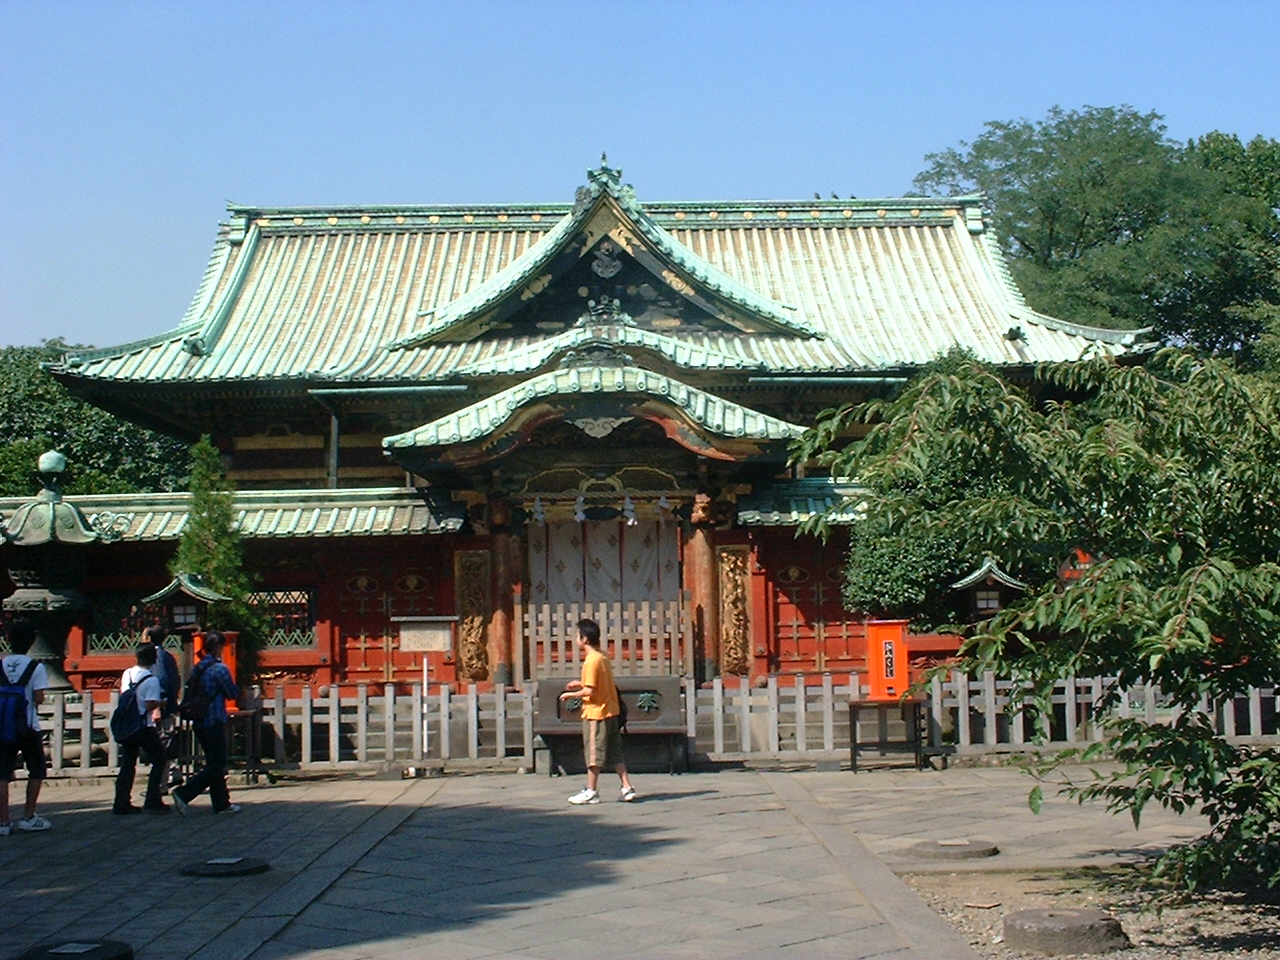 the vermillion building of a shrine